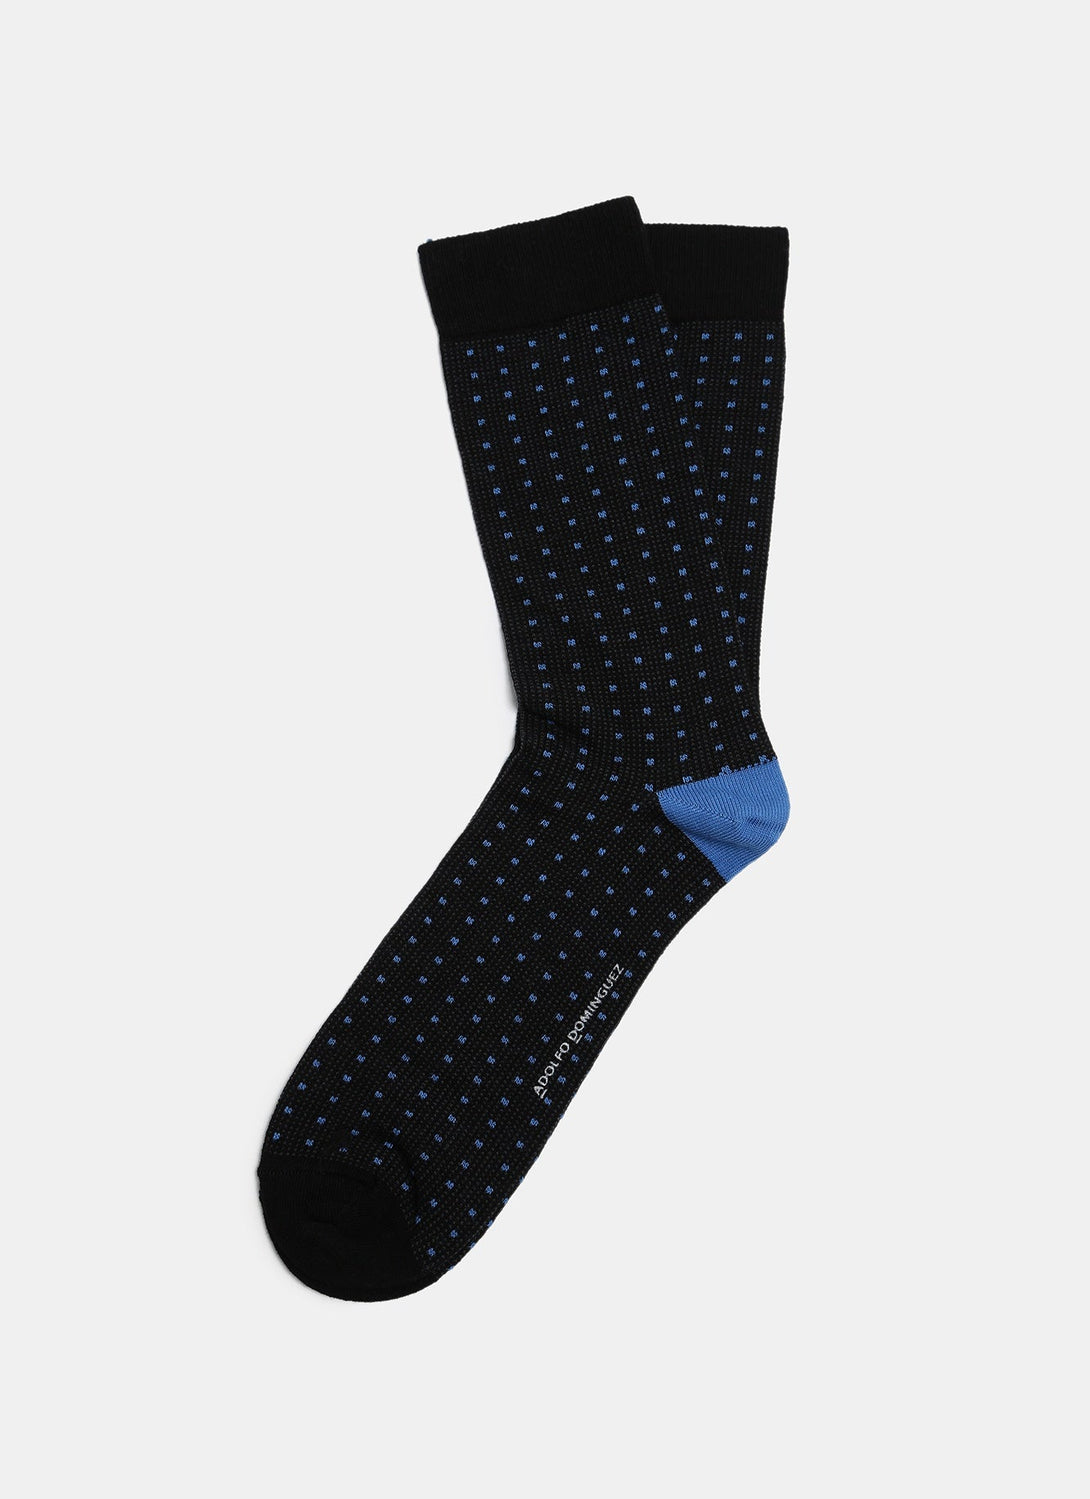 Men Socks | Grey Low Cut Socks With Pindot Print by Spanish designer Adolfo Dominguez